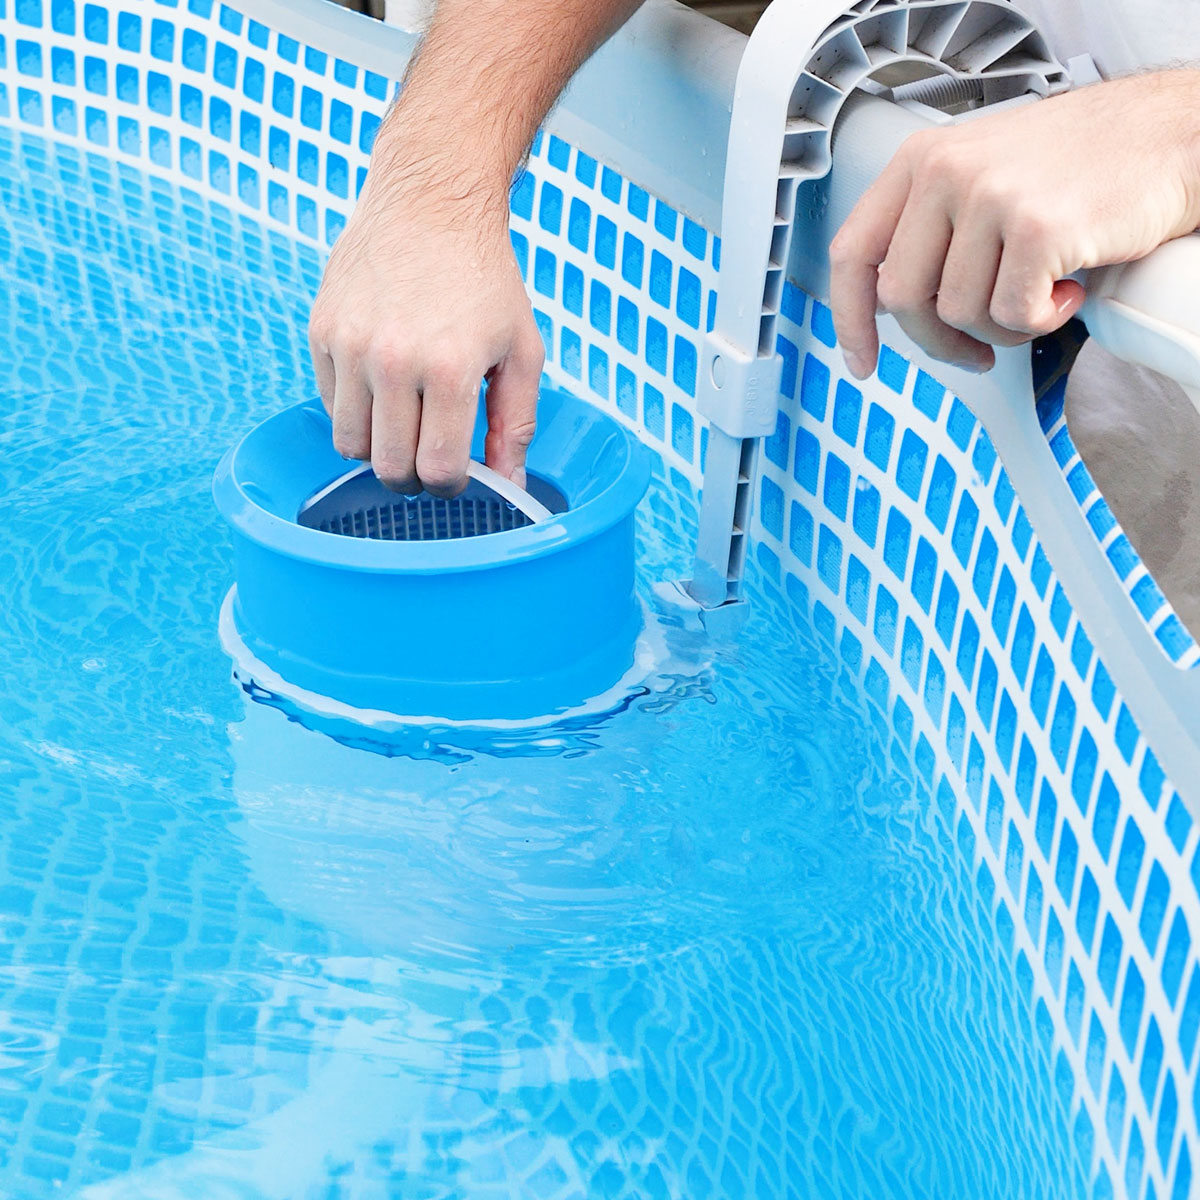 Replacing Your Pool Filter